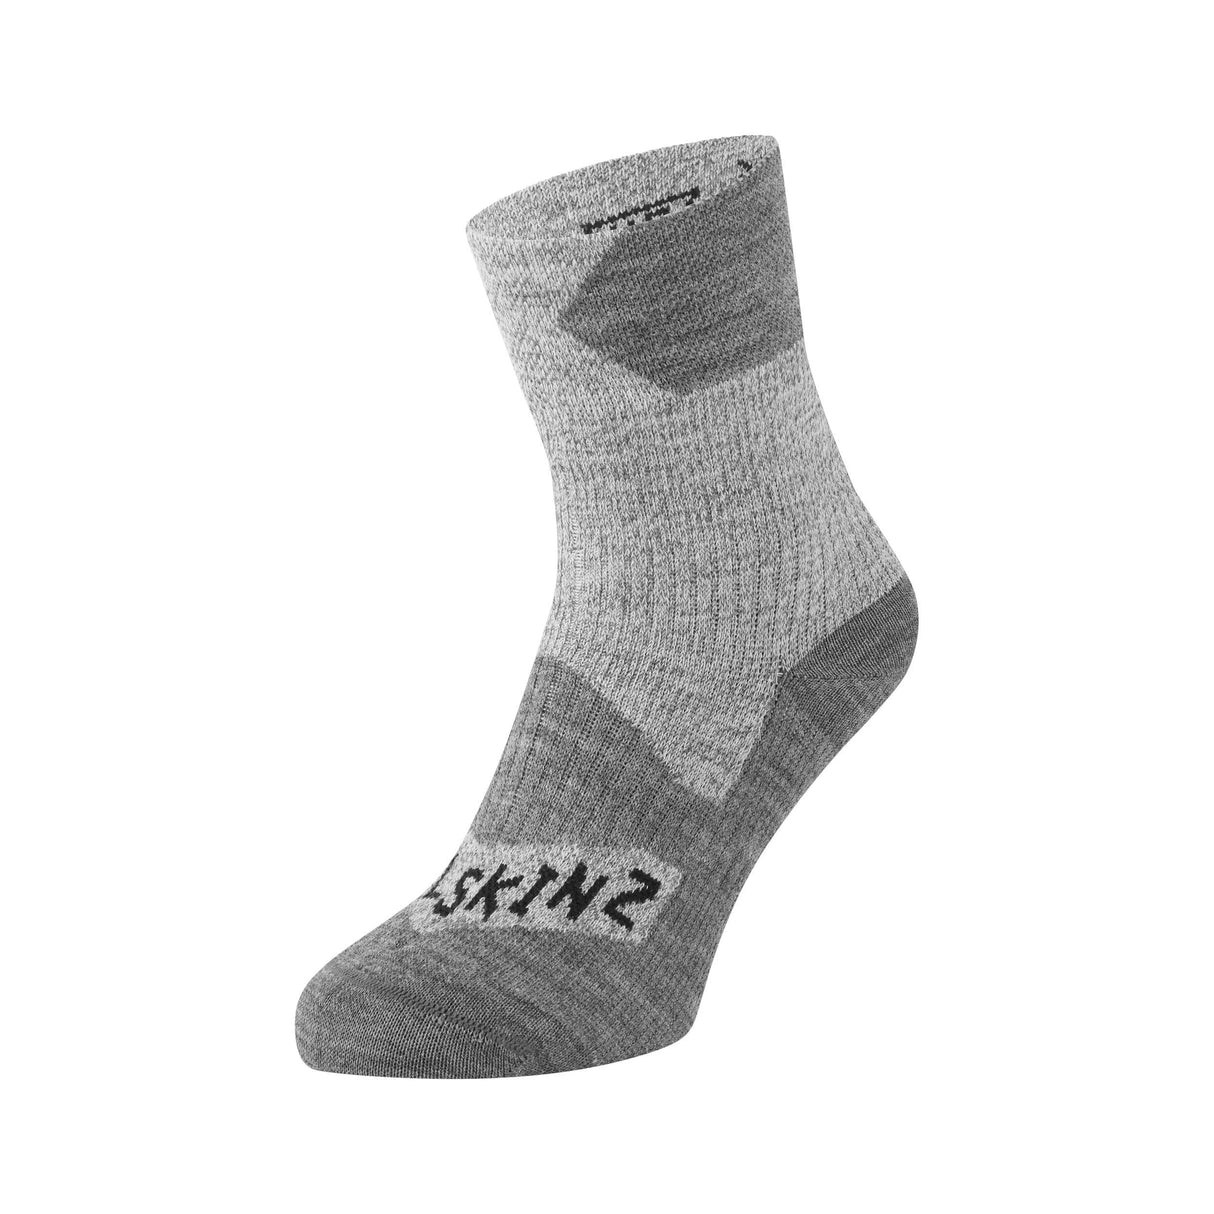 Sealskinz Bircham Waterproof All-Weather Ankle Socks  -  Small / Gray/Gray Marl